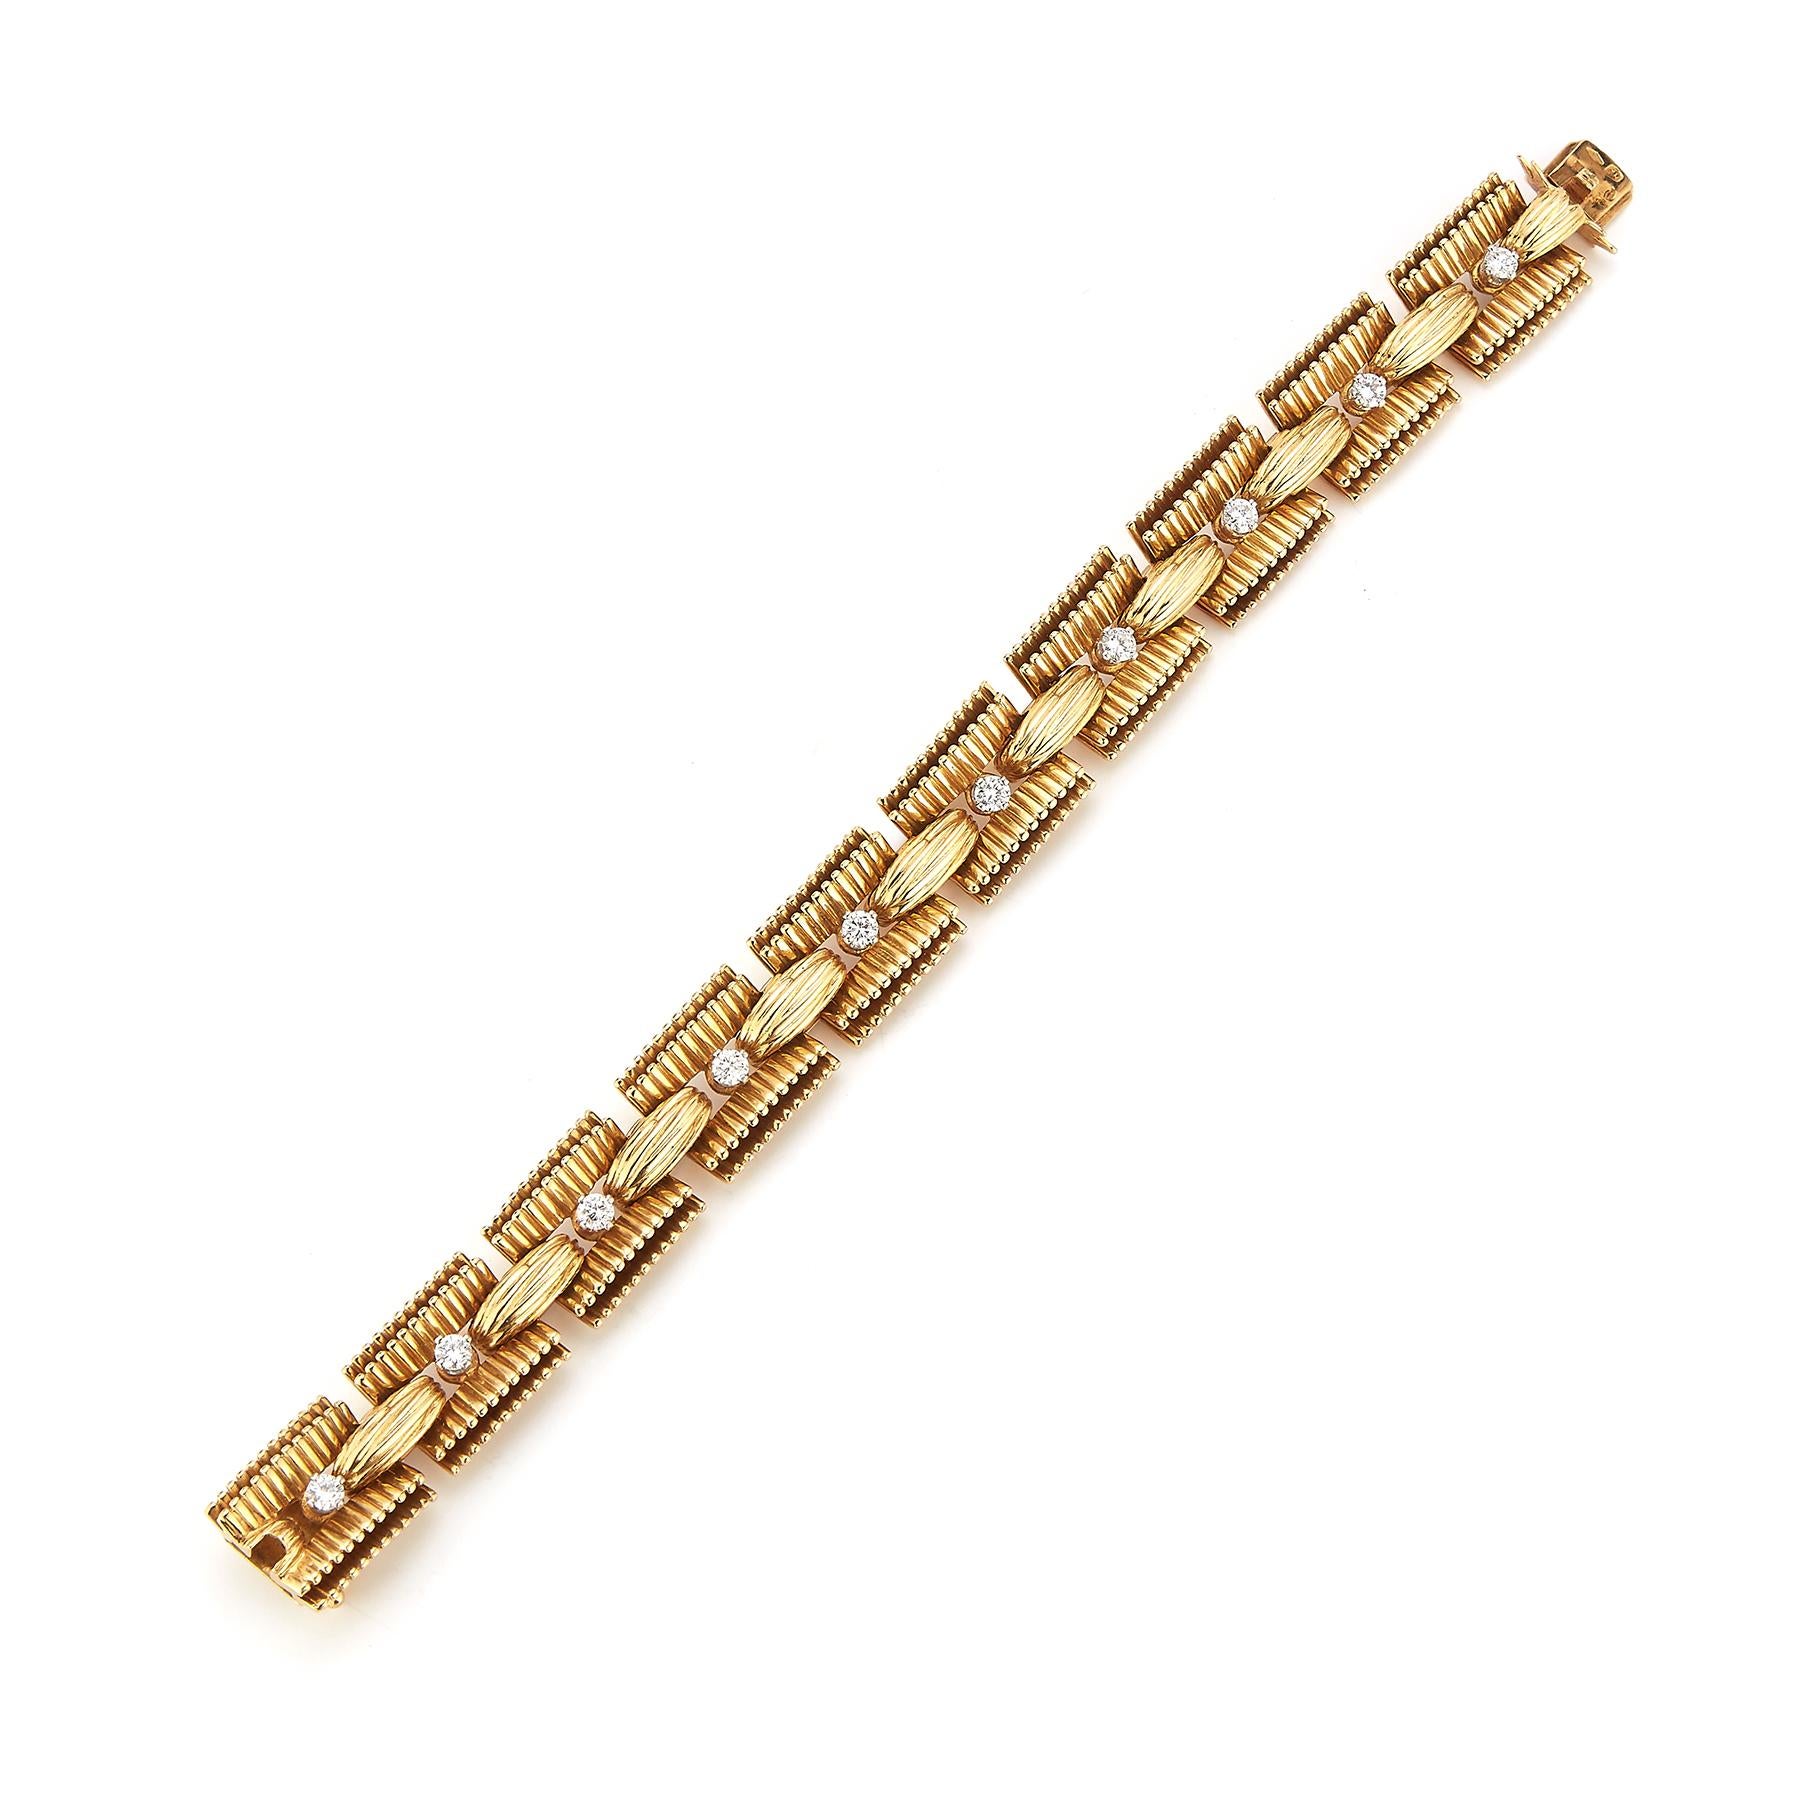 Cartier Yellow Gold and Diamond Bracelet

18 karat Gold links set with 10 round cut diamonds

Measurements: 7